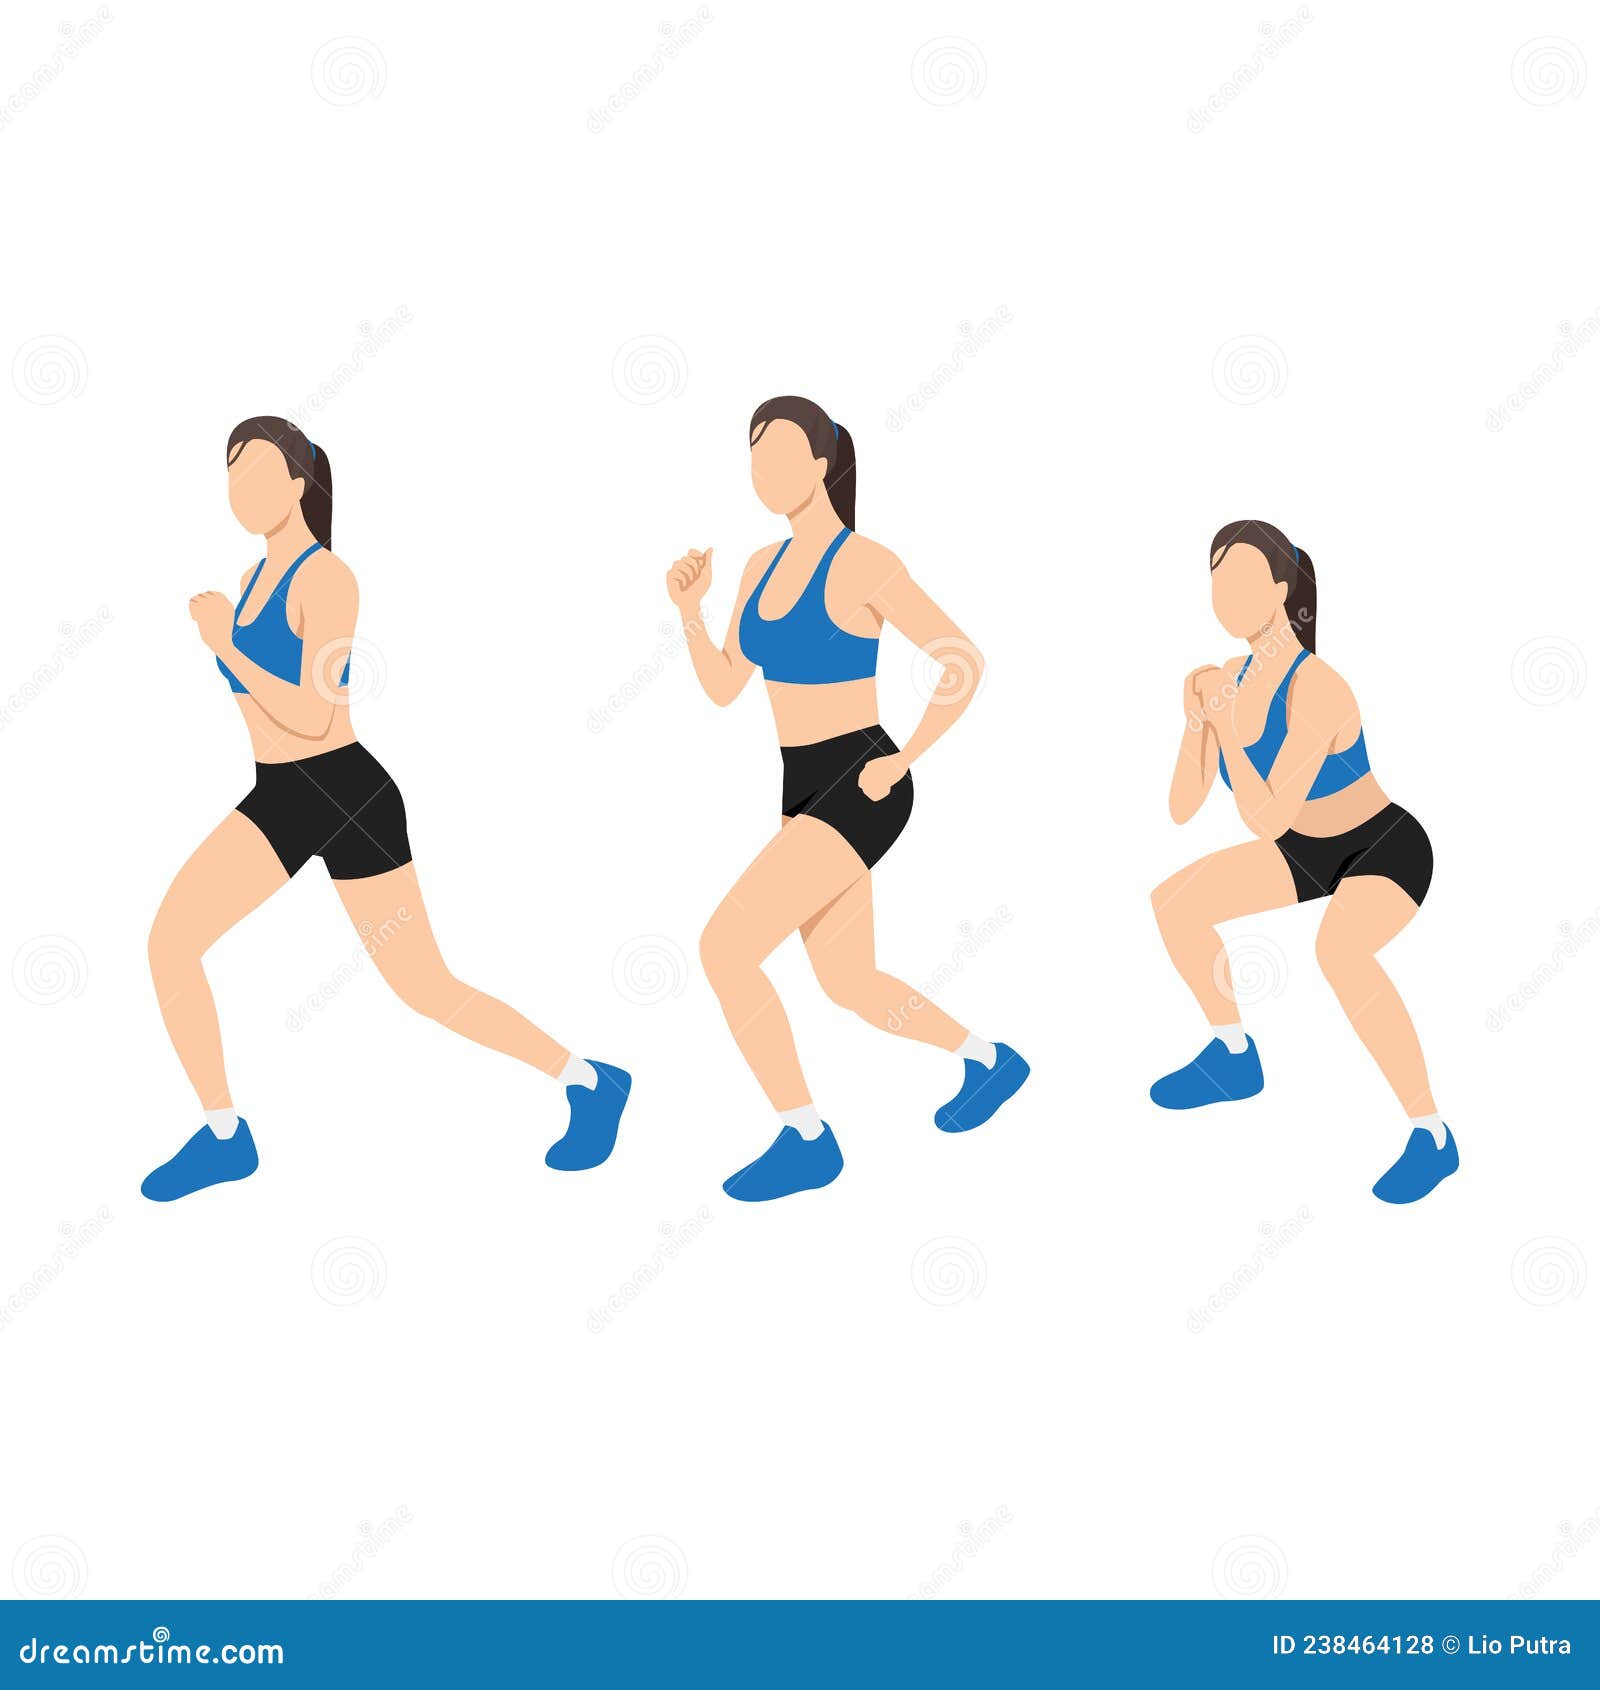 woman doing flutter kick squat exercise.